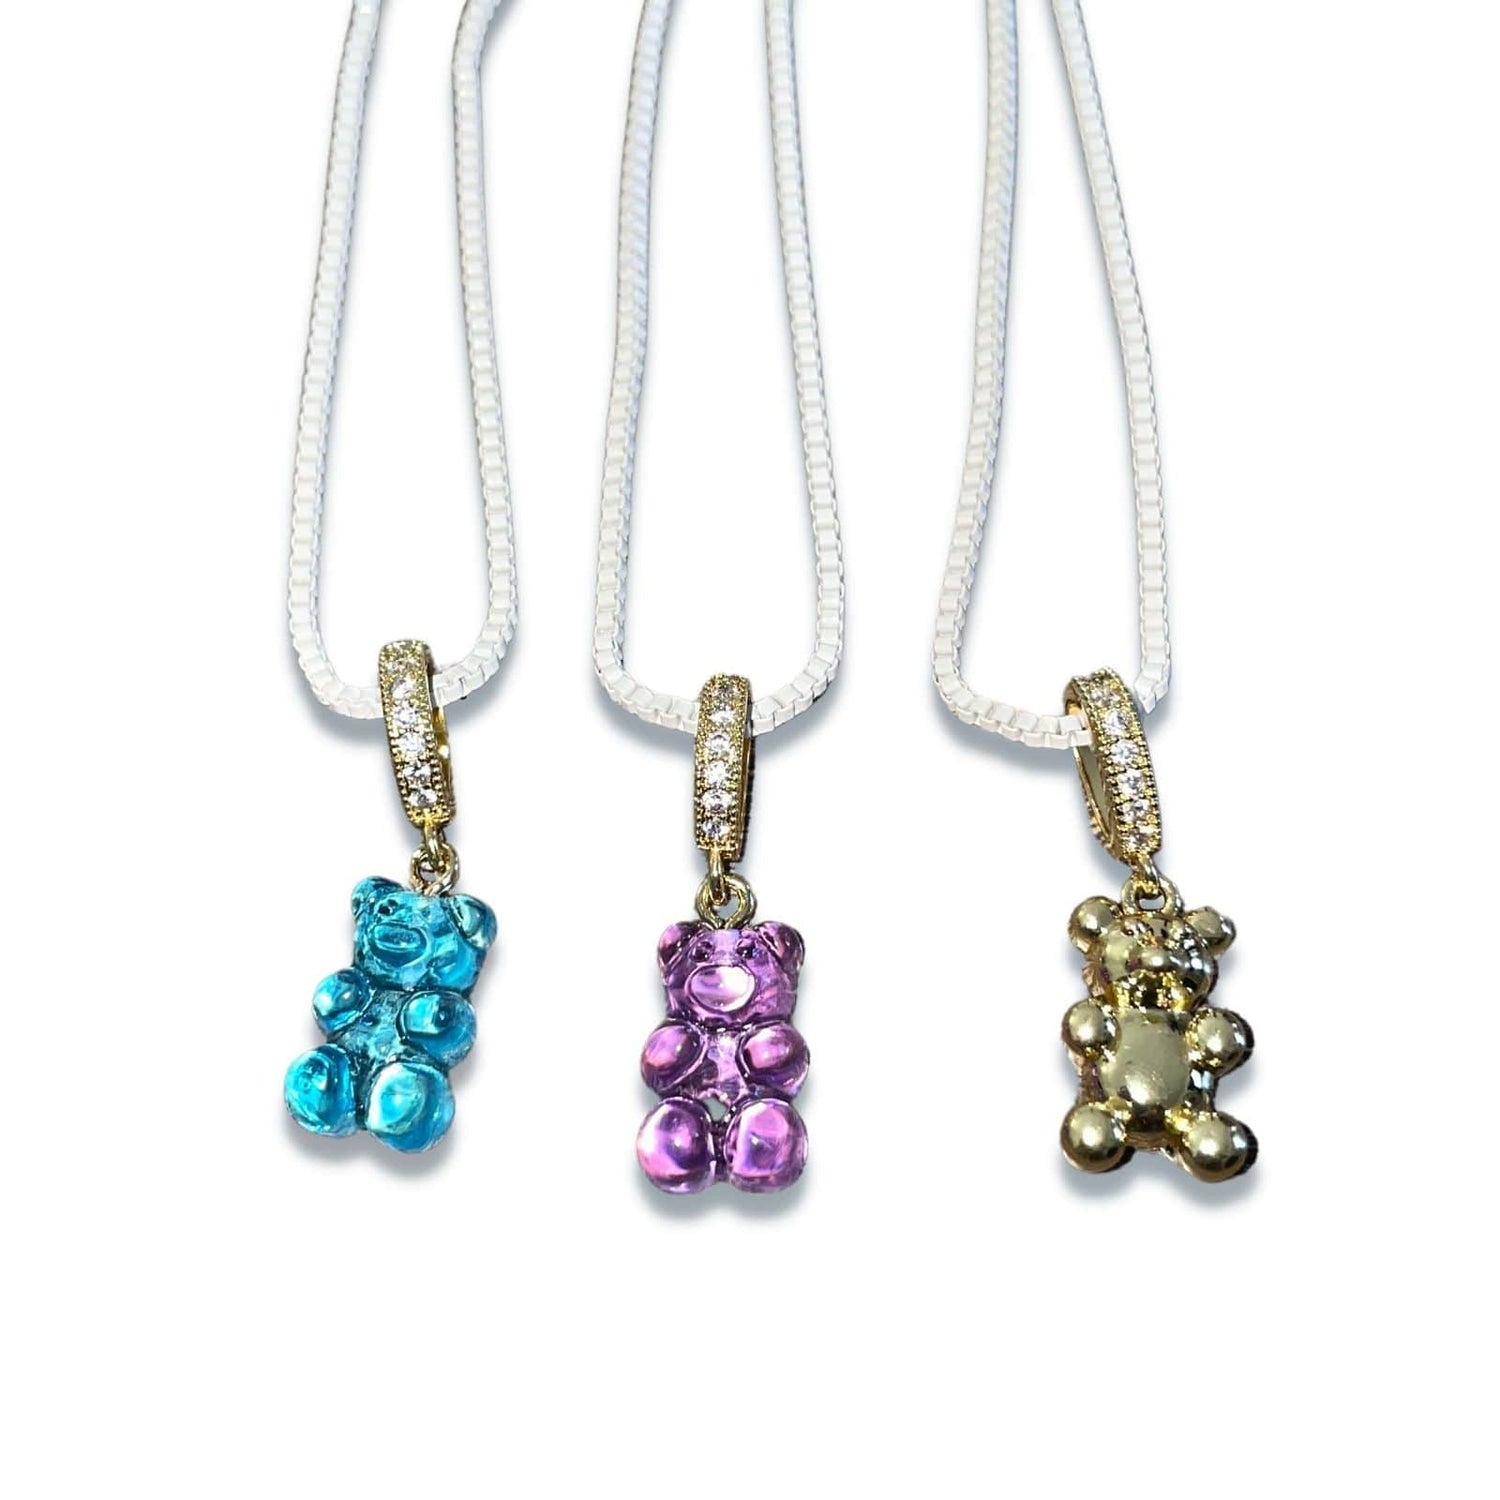 three Original gummy bear charm bracelets, blue / purple / gold on white chain bracelet - GummyBearBling